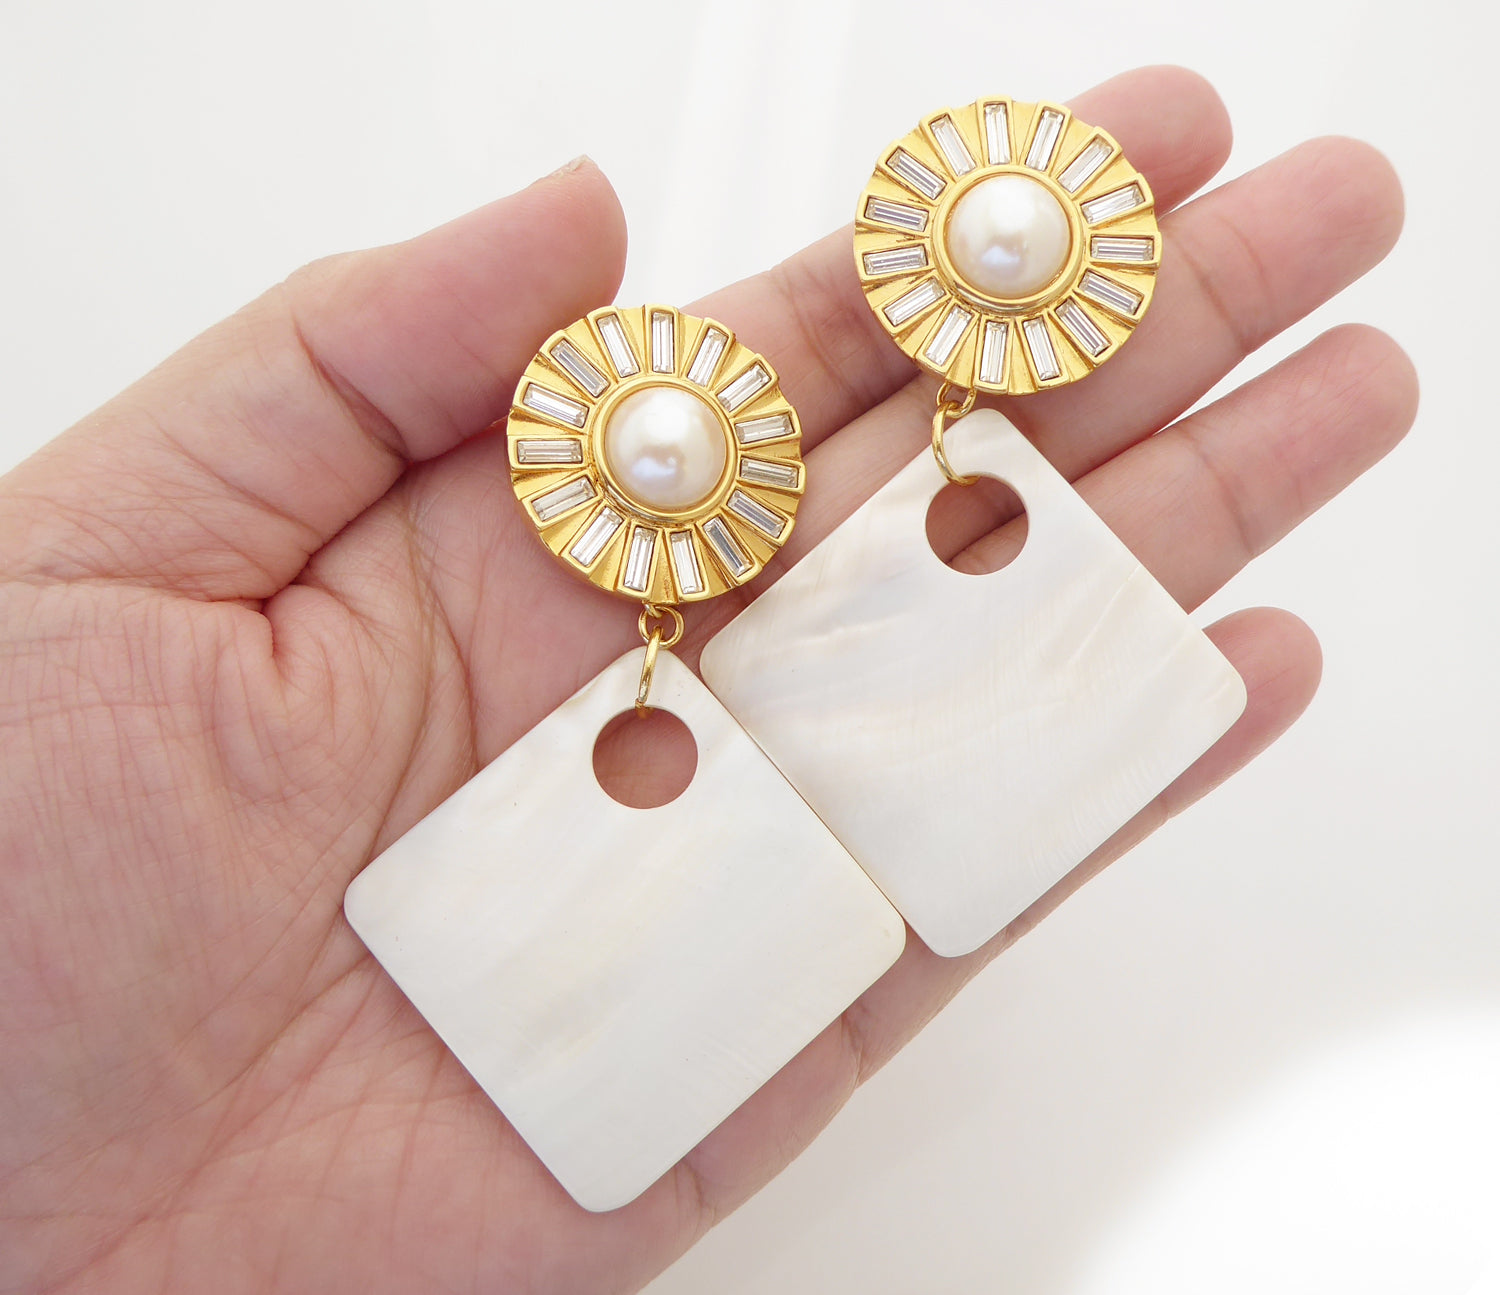 Celesse earrings by Jenny Dayco 8